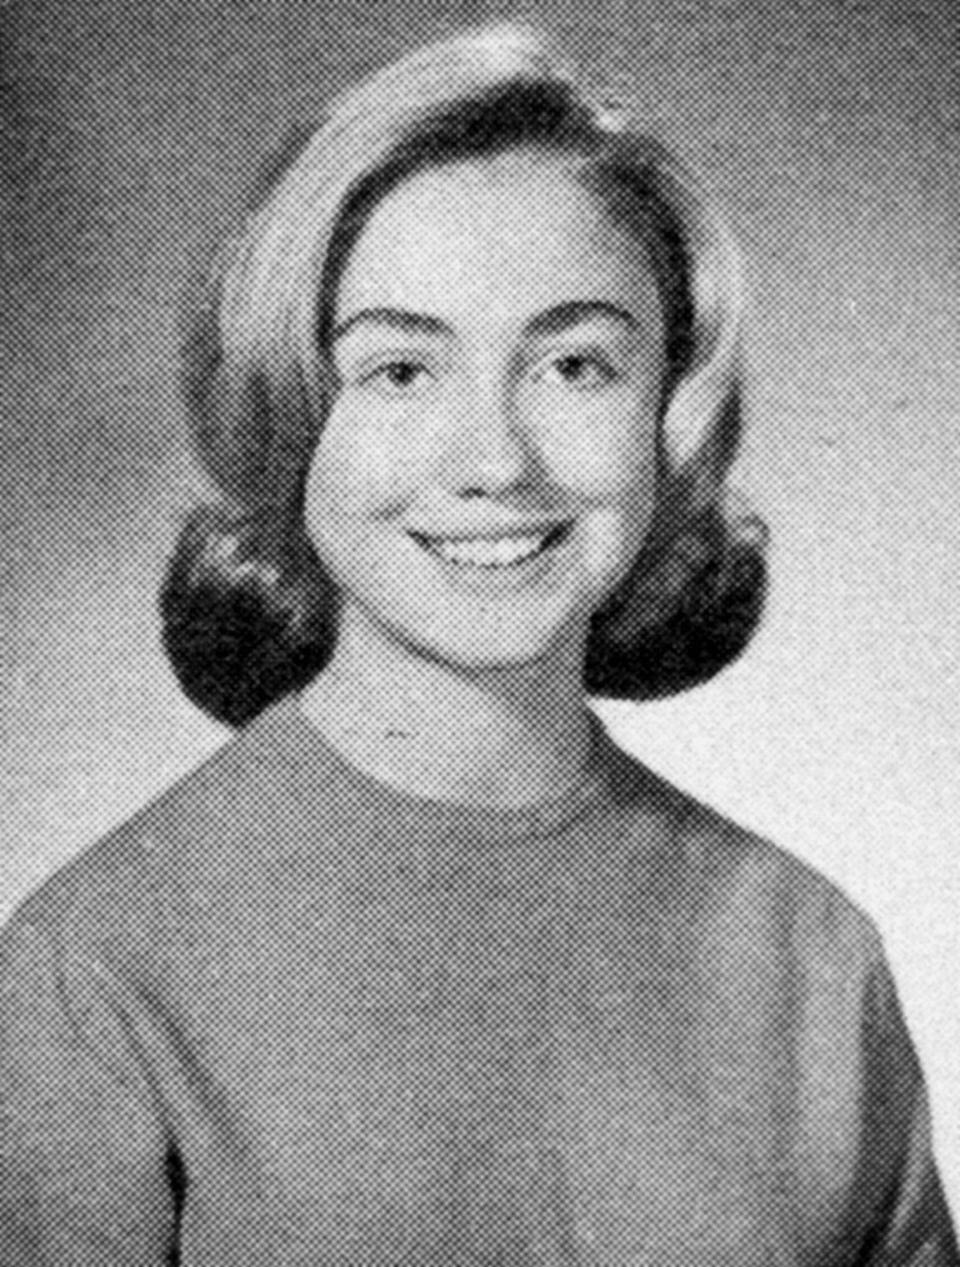 Hillary Clinton: 1965